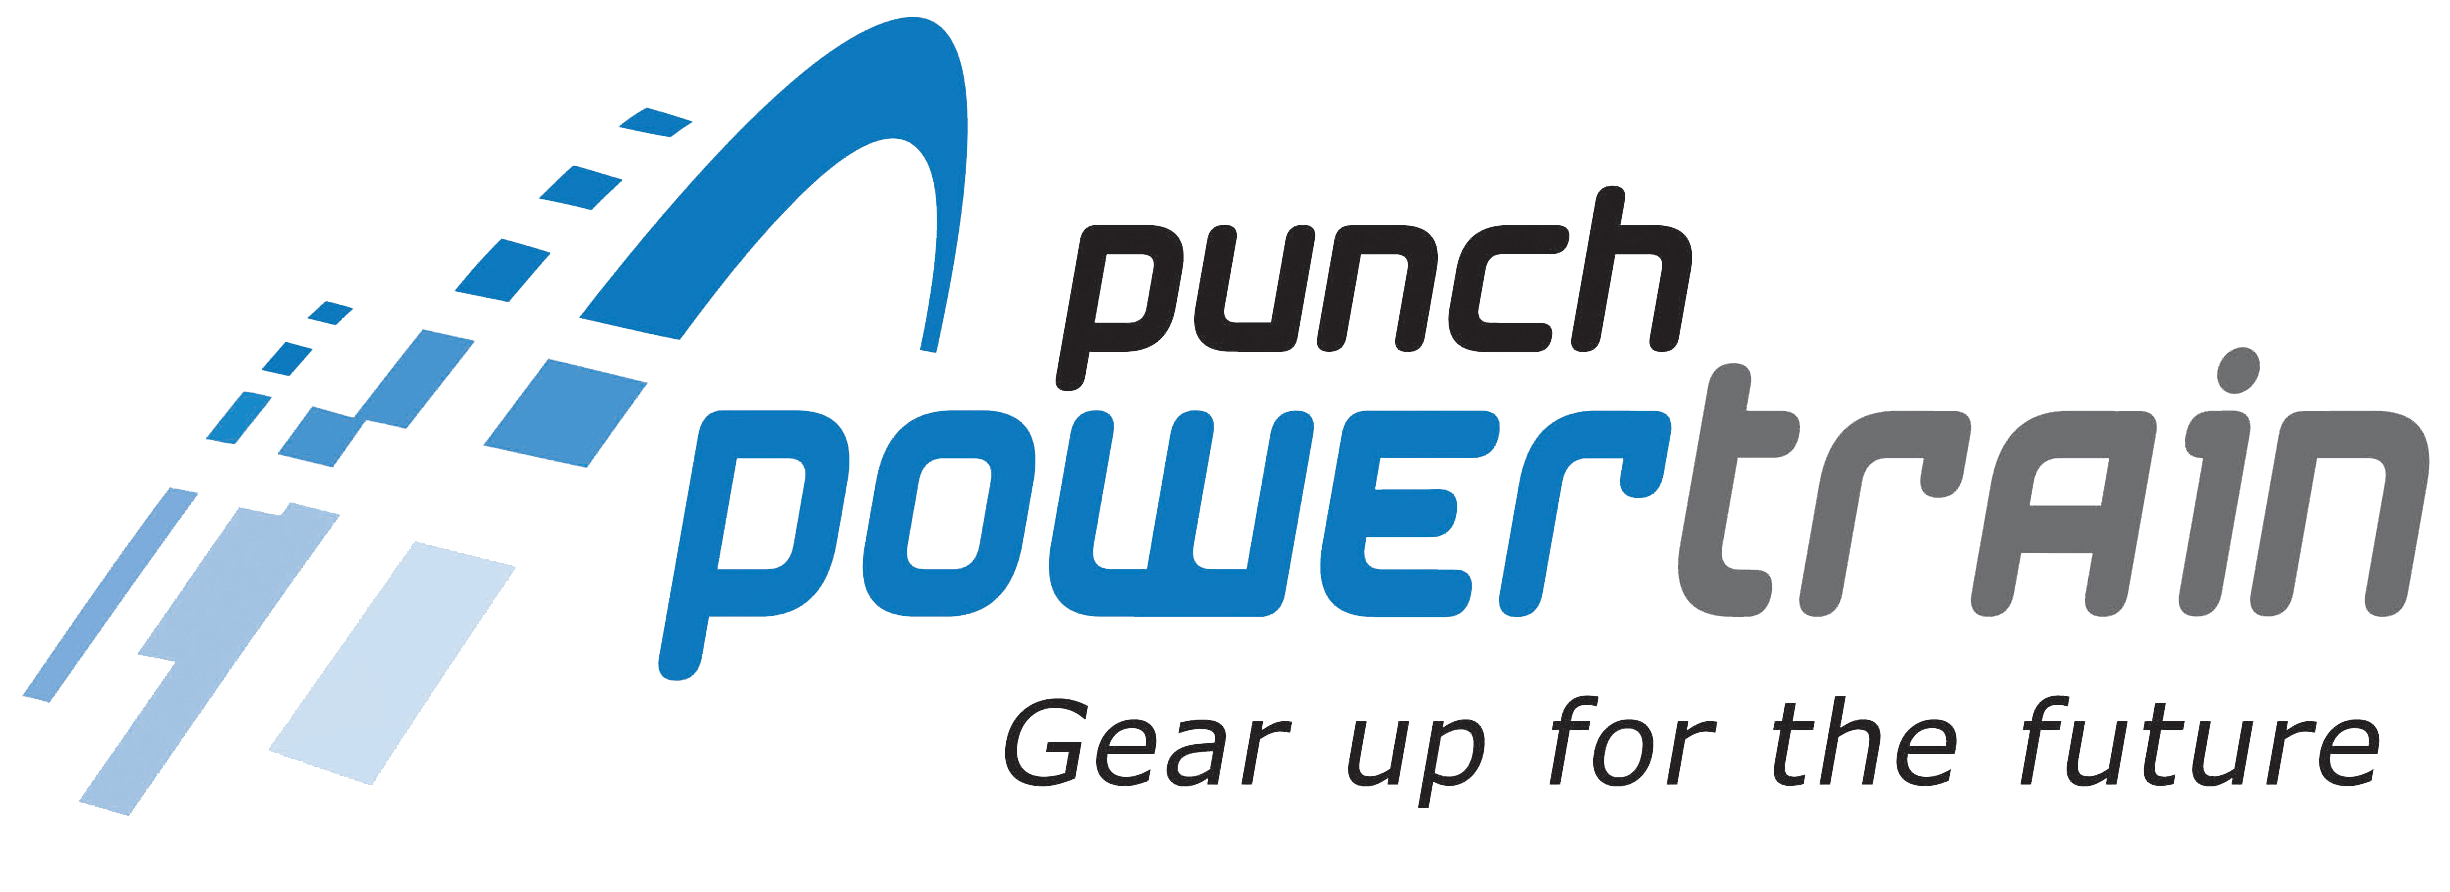 punch-powertrain-logo